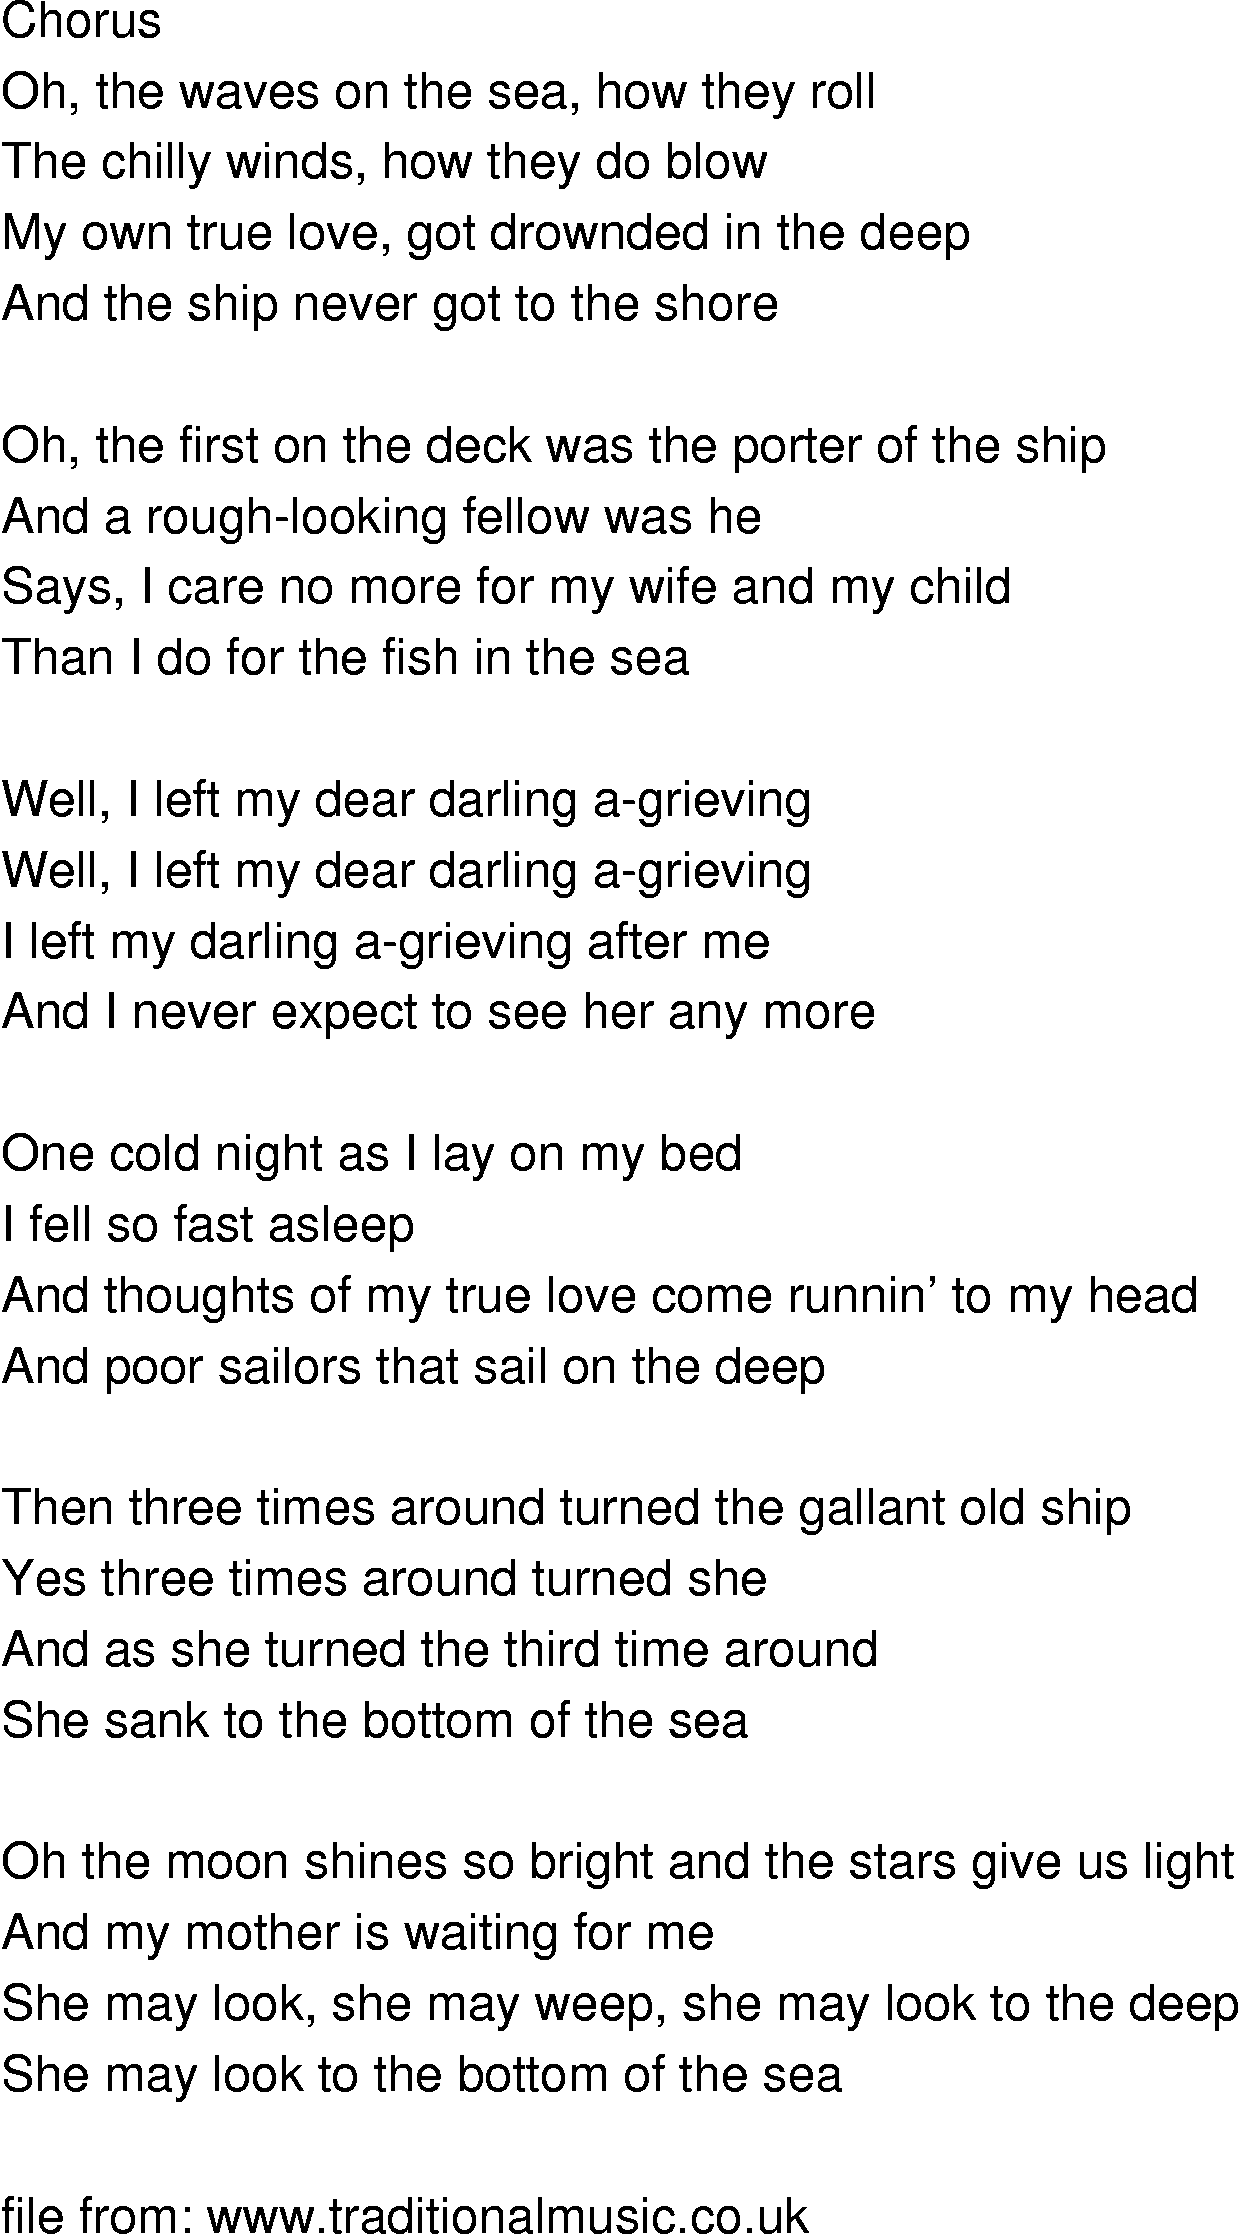 Old-Time (oldtimey) Song Lyrics - waves on the sea